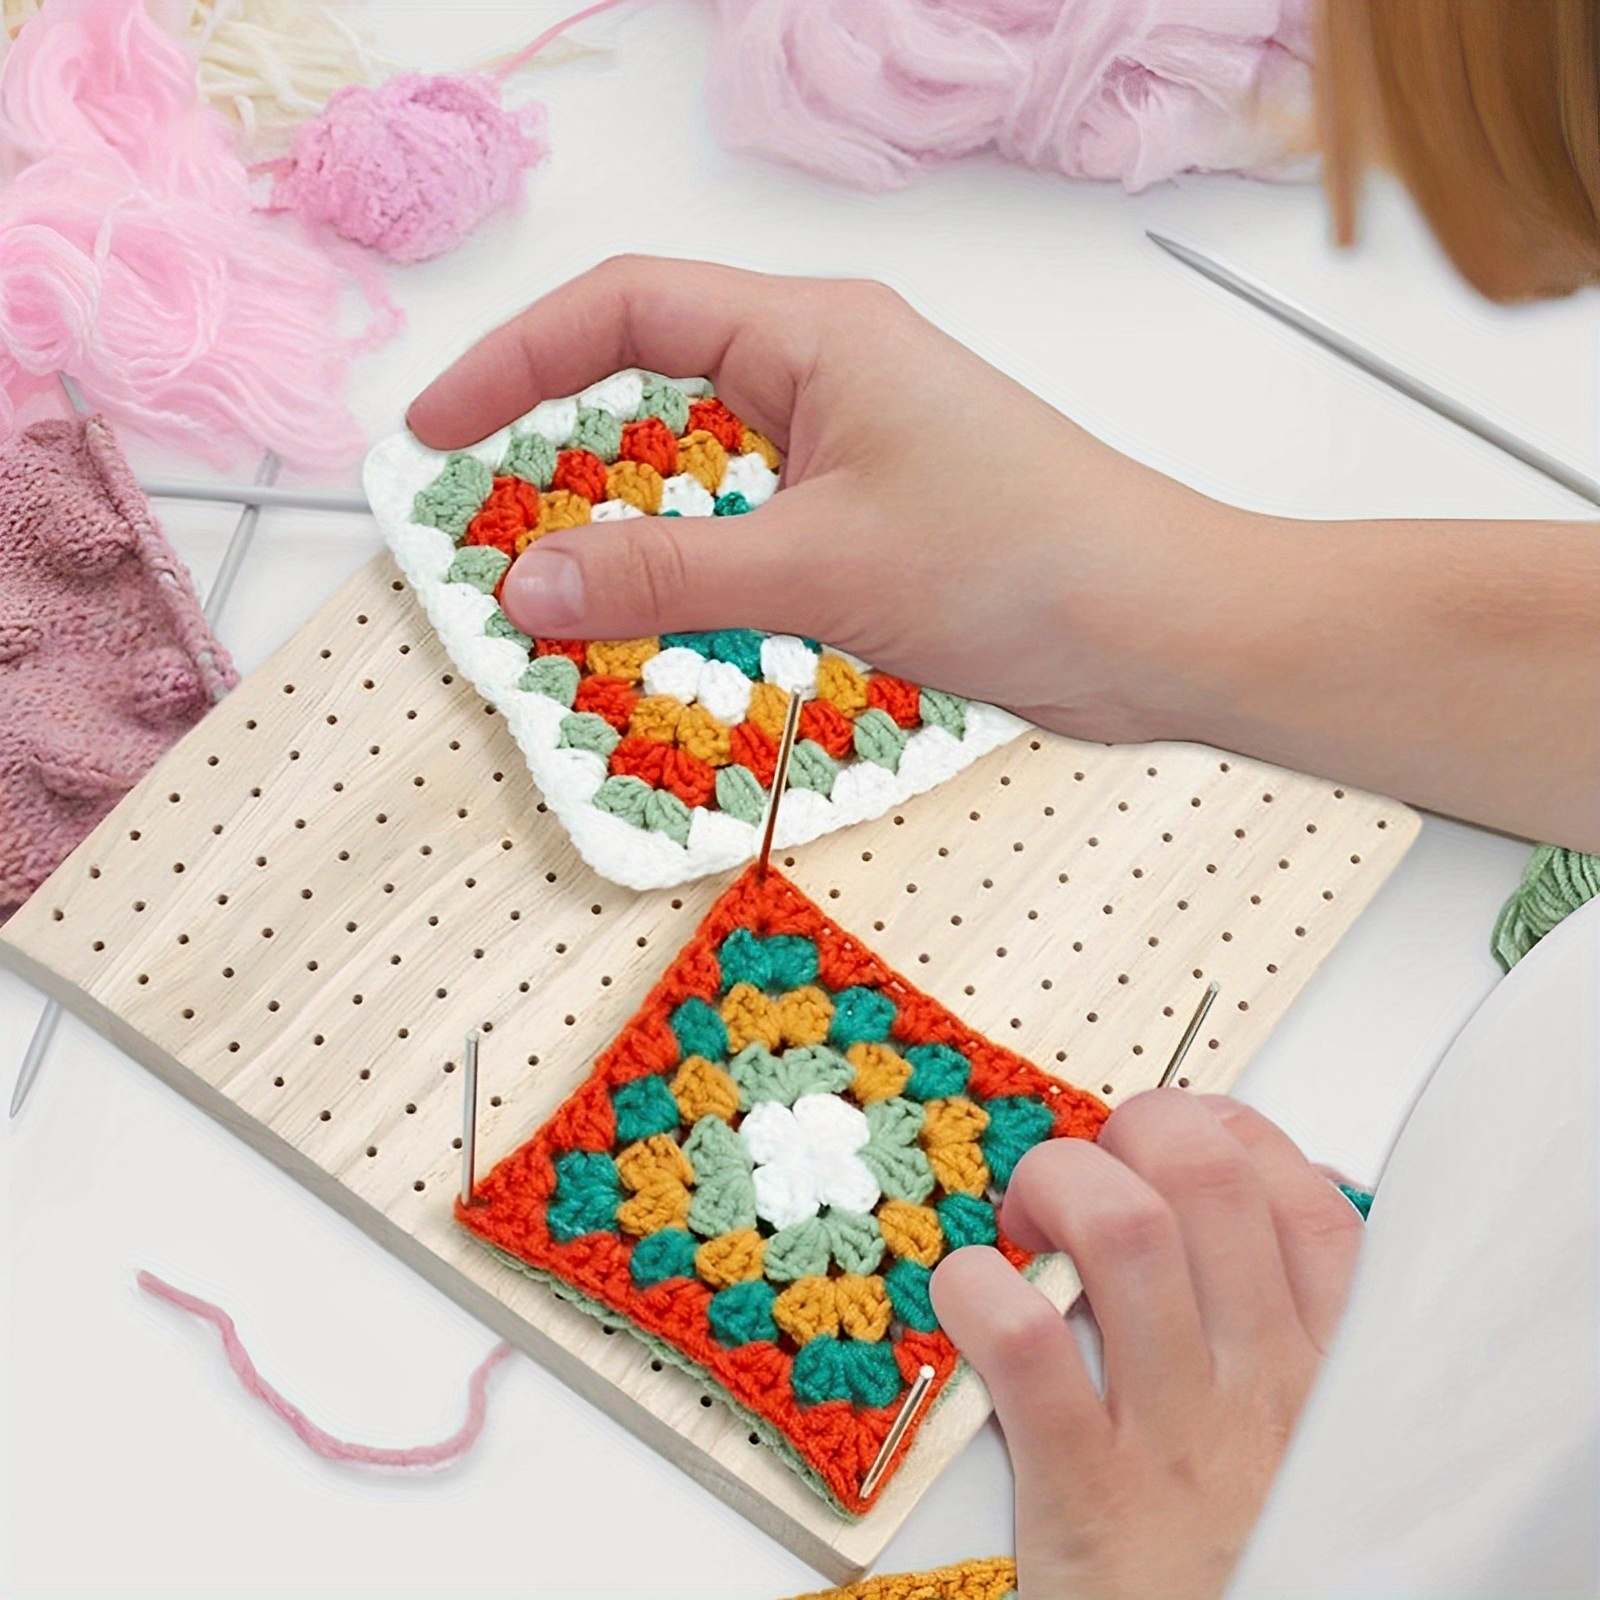 Hexagon Crochet Blocking Board and Stainless Steel Pins Knitting Block  Handmade